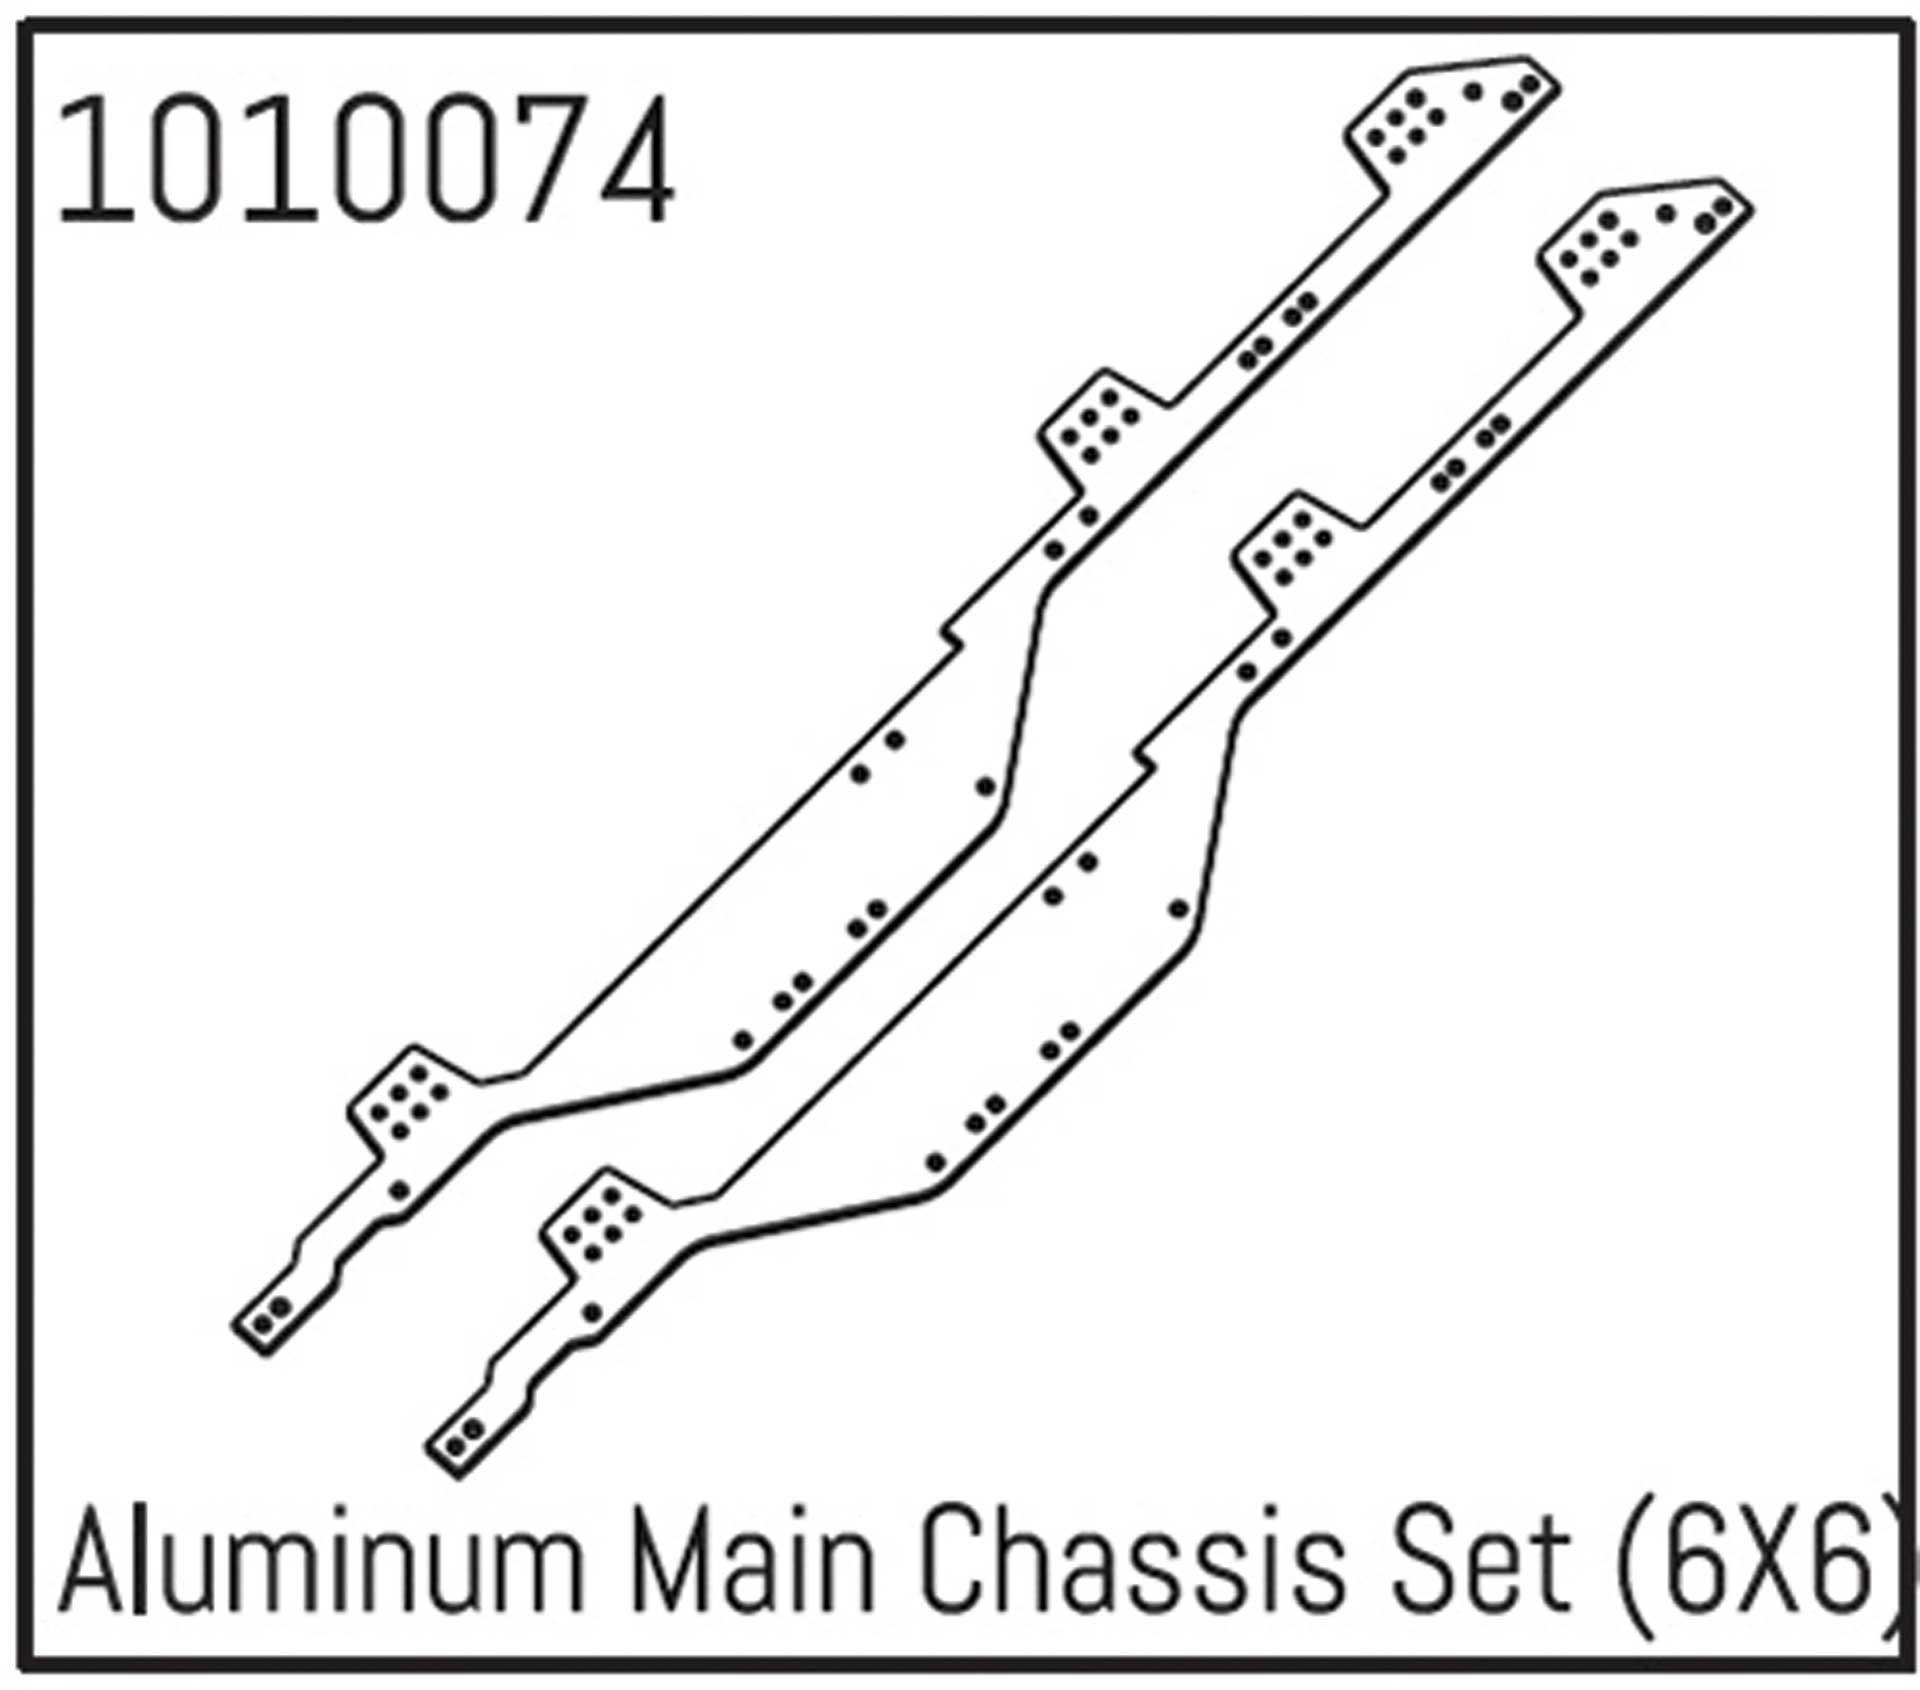 ABSIMA Aluminum Main Chassis Set (6X6)